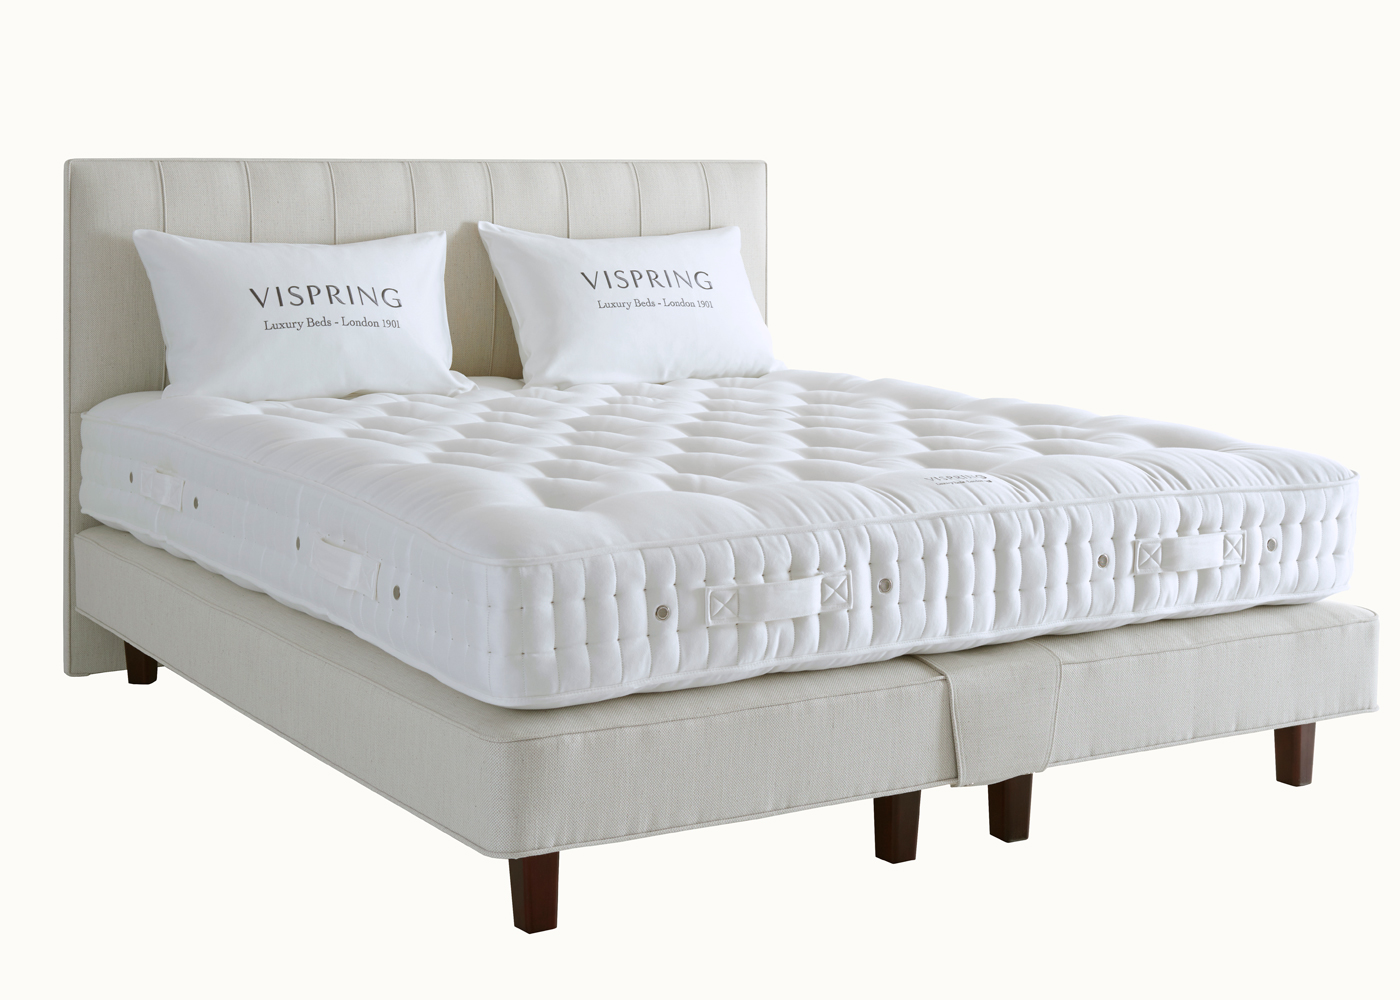 vi spring regal superb super king size mattress